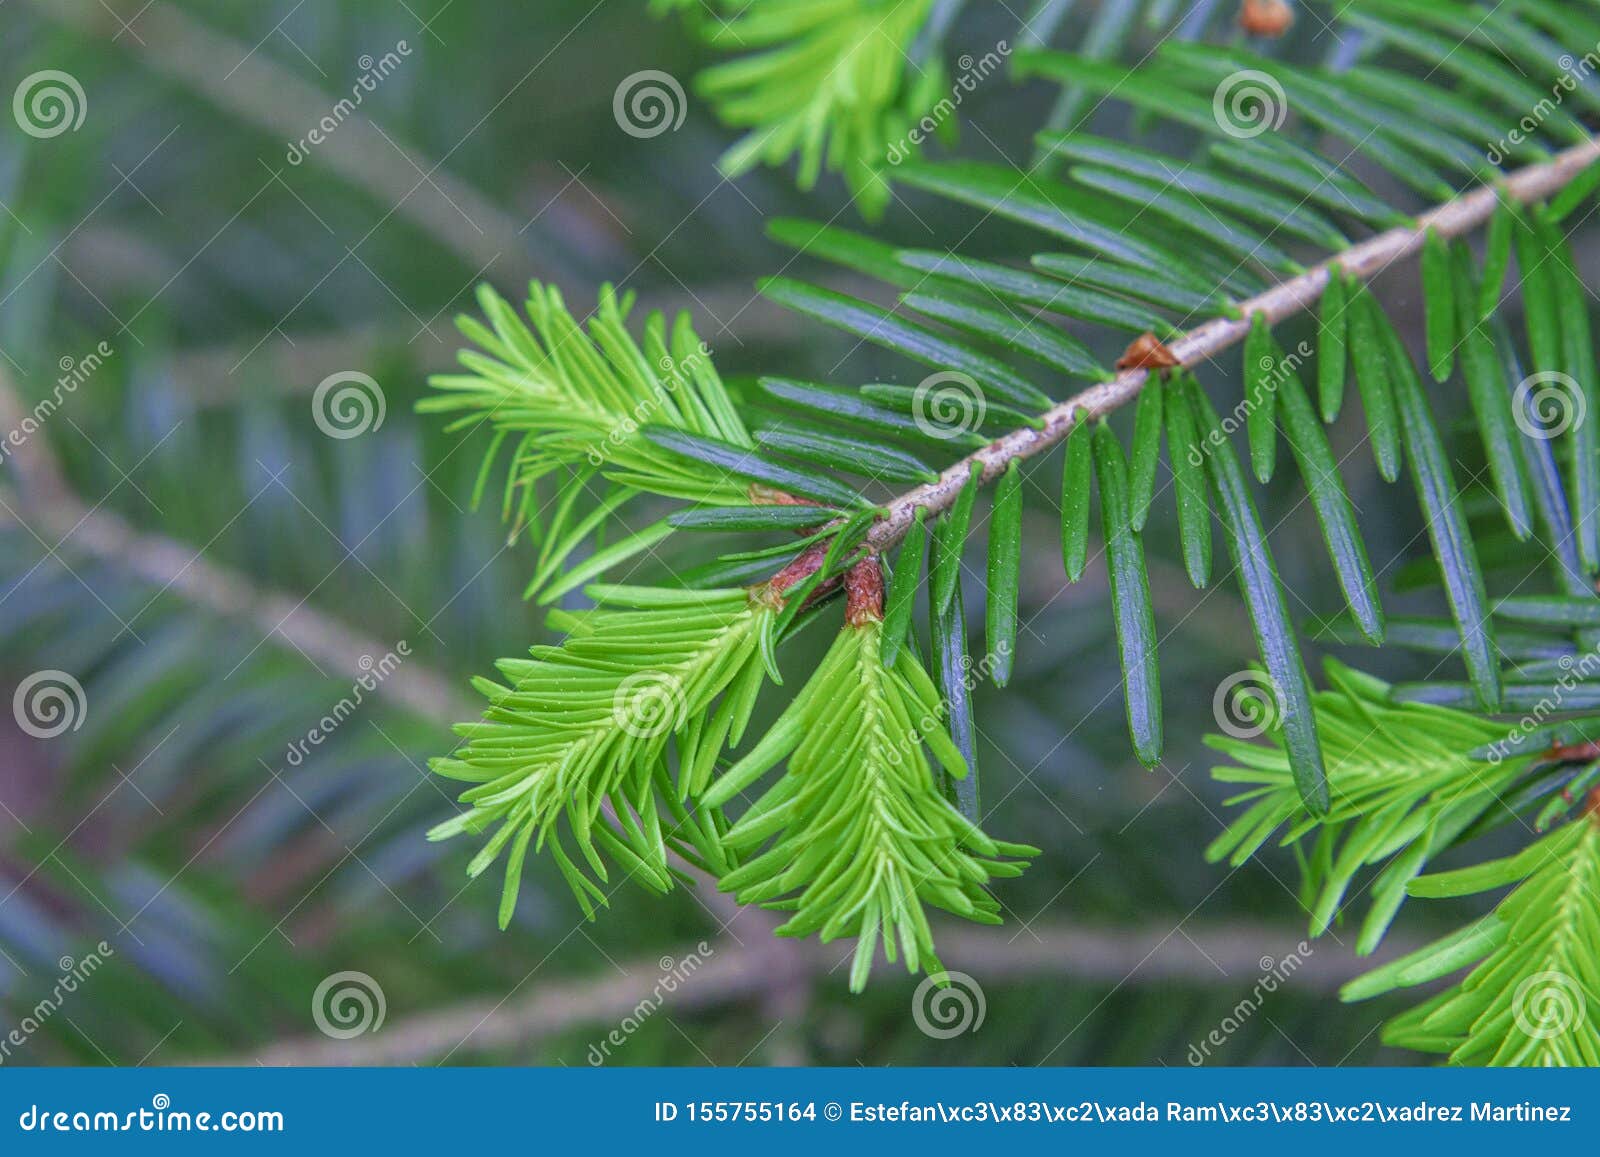 pine tree leave detail